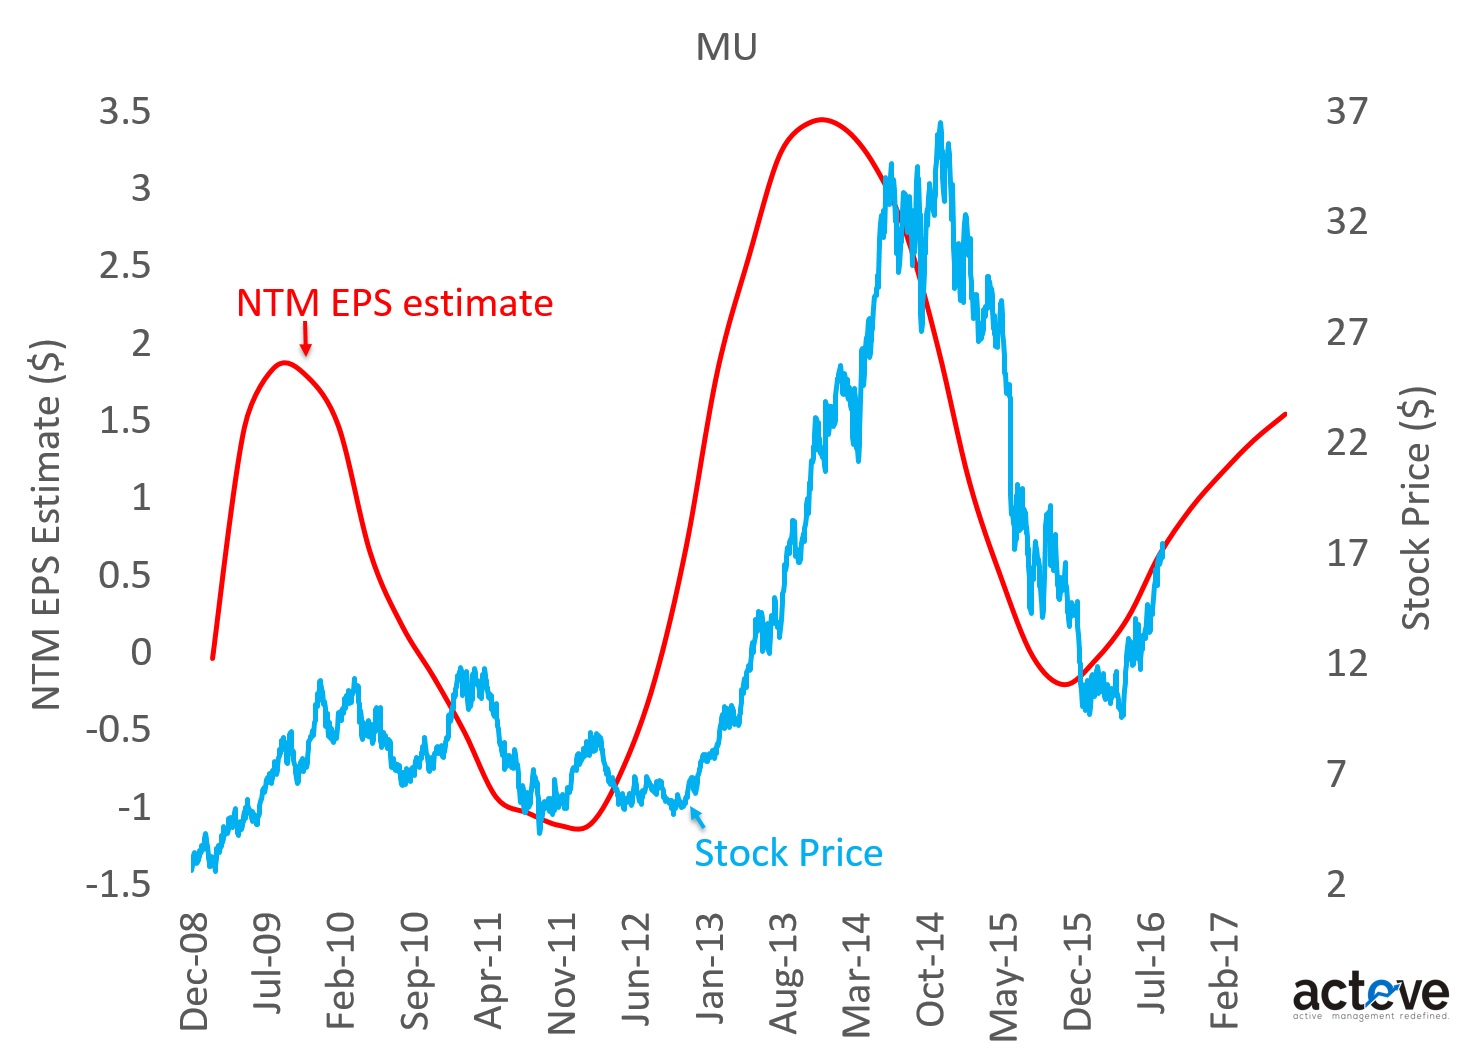 MU stock price vs. NTM EPS